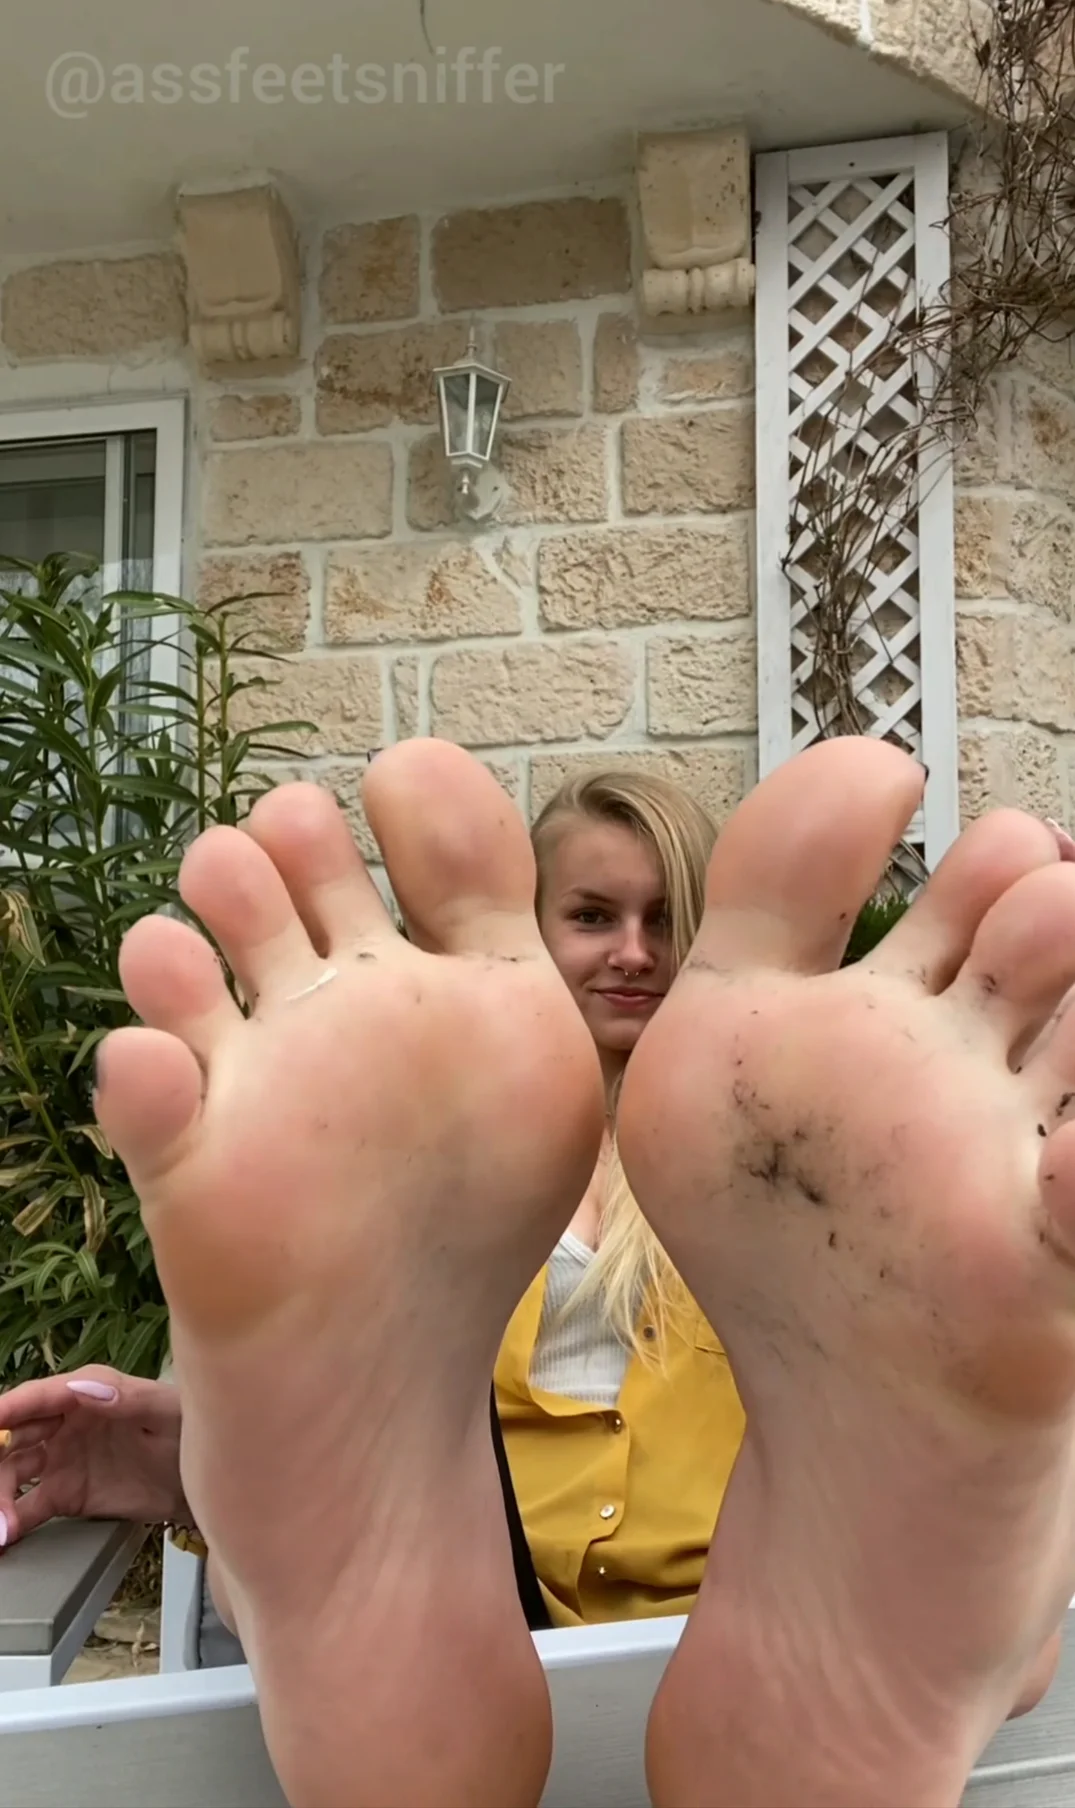 Girls Sexy Smelly Feet - Blonde Girl Stinky Feet And Dirty Socks - ThisVid.com